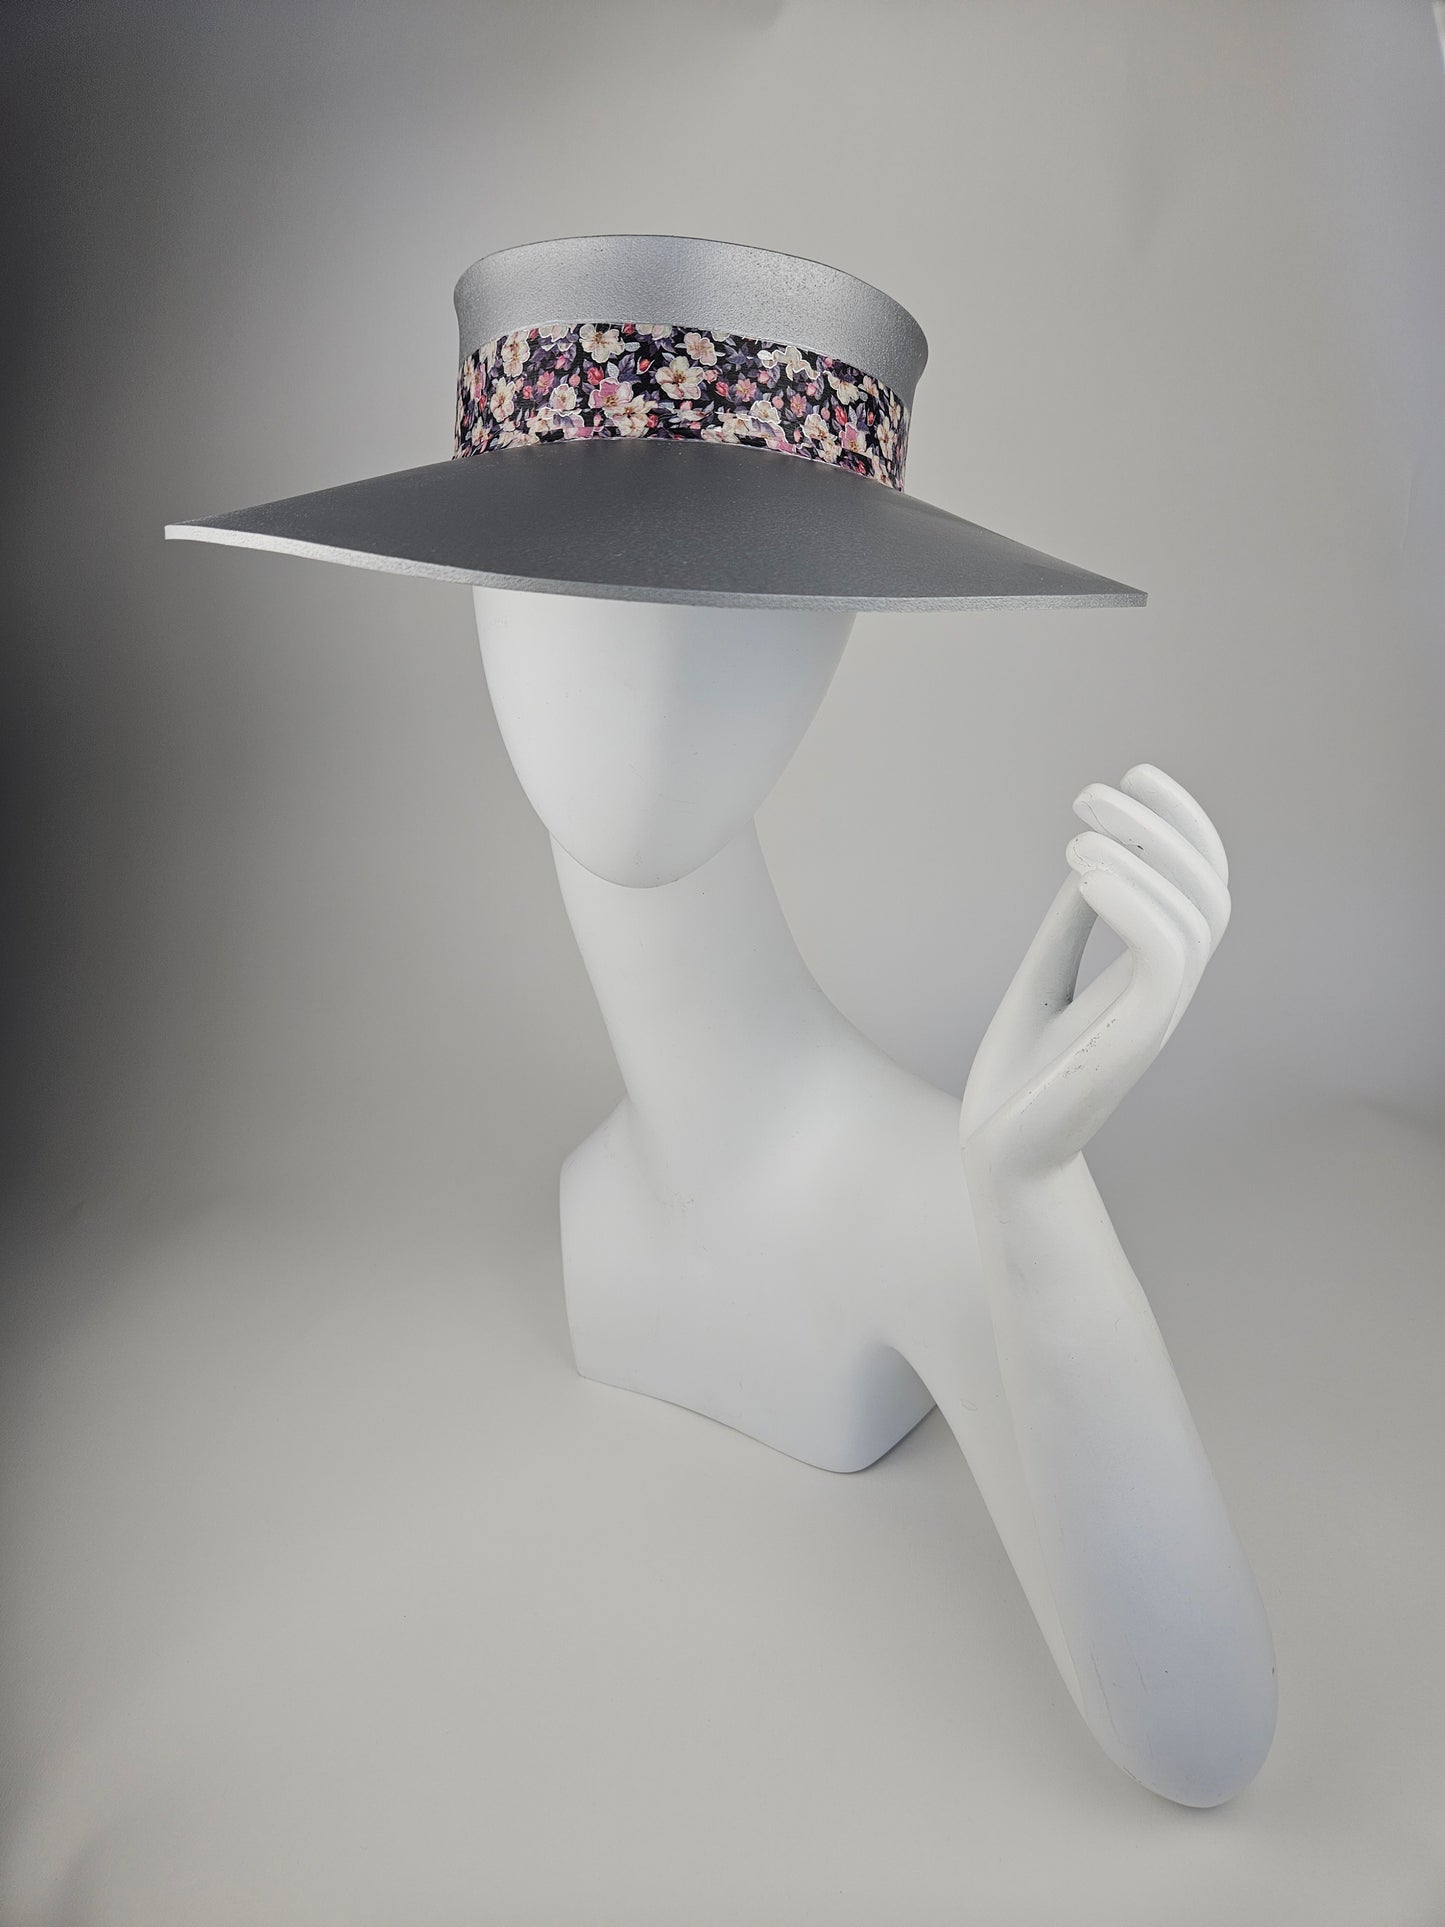 Trending Silver Audrey Sun Visor Hat with Lovely Dark Floral Band: 1950s, Walks, Brunch, Asian, Golf, Summer, Church, No Headache, Pool, Beach